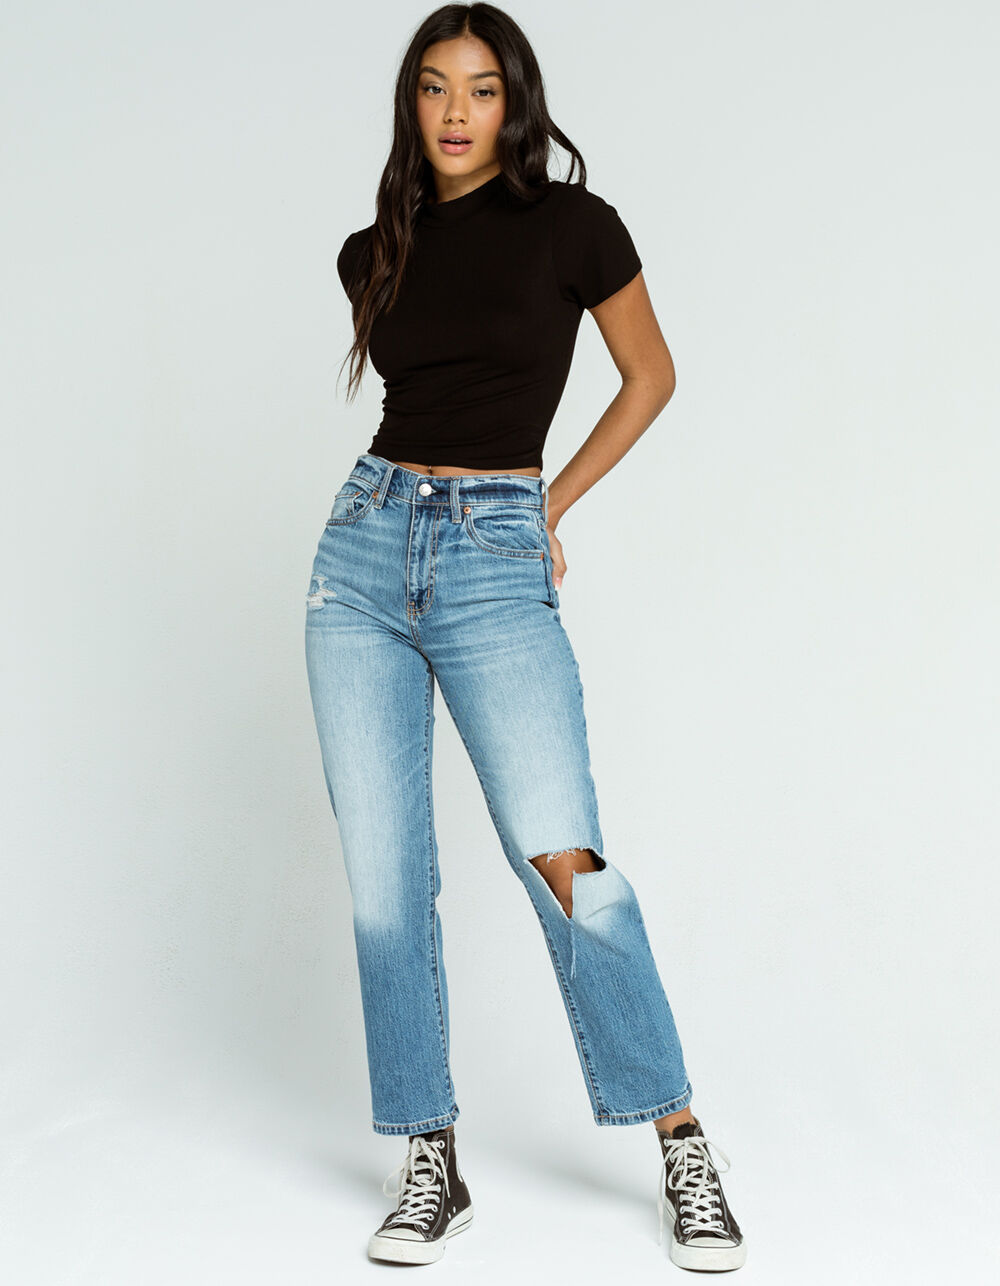 DAZE DENIMDAZE Straight Up High Rise Jeans | DailyMail